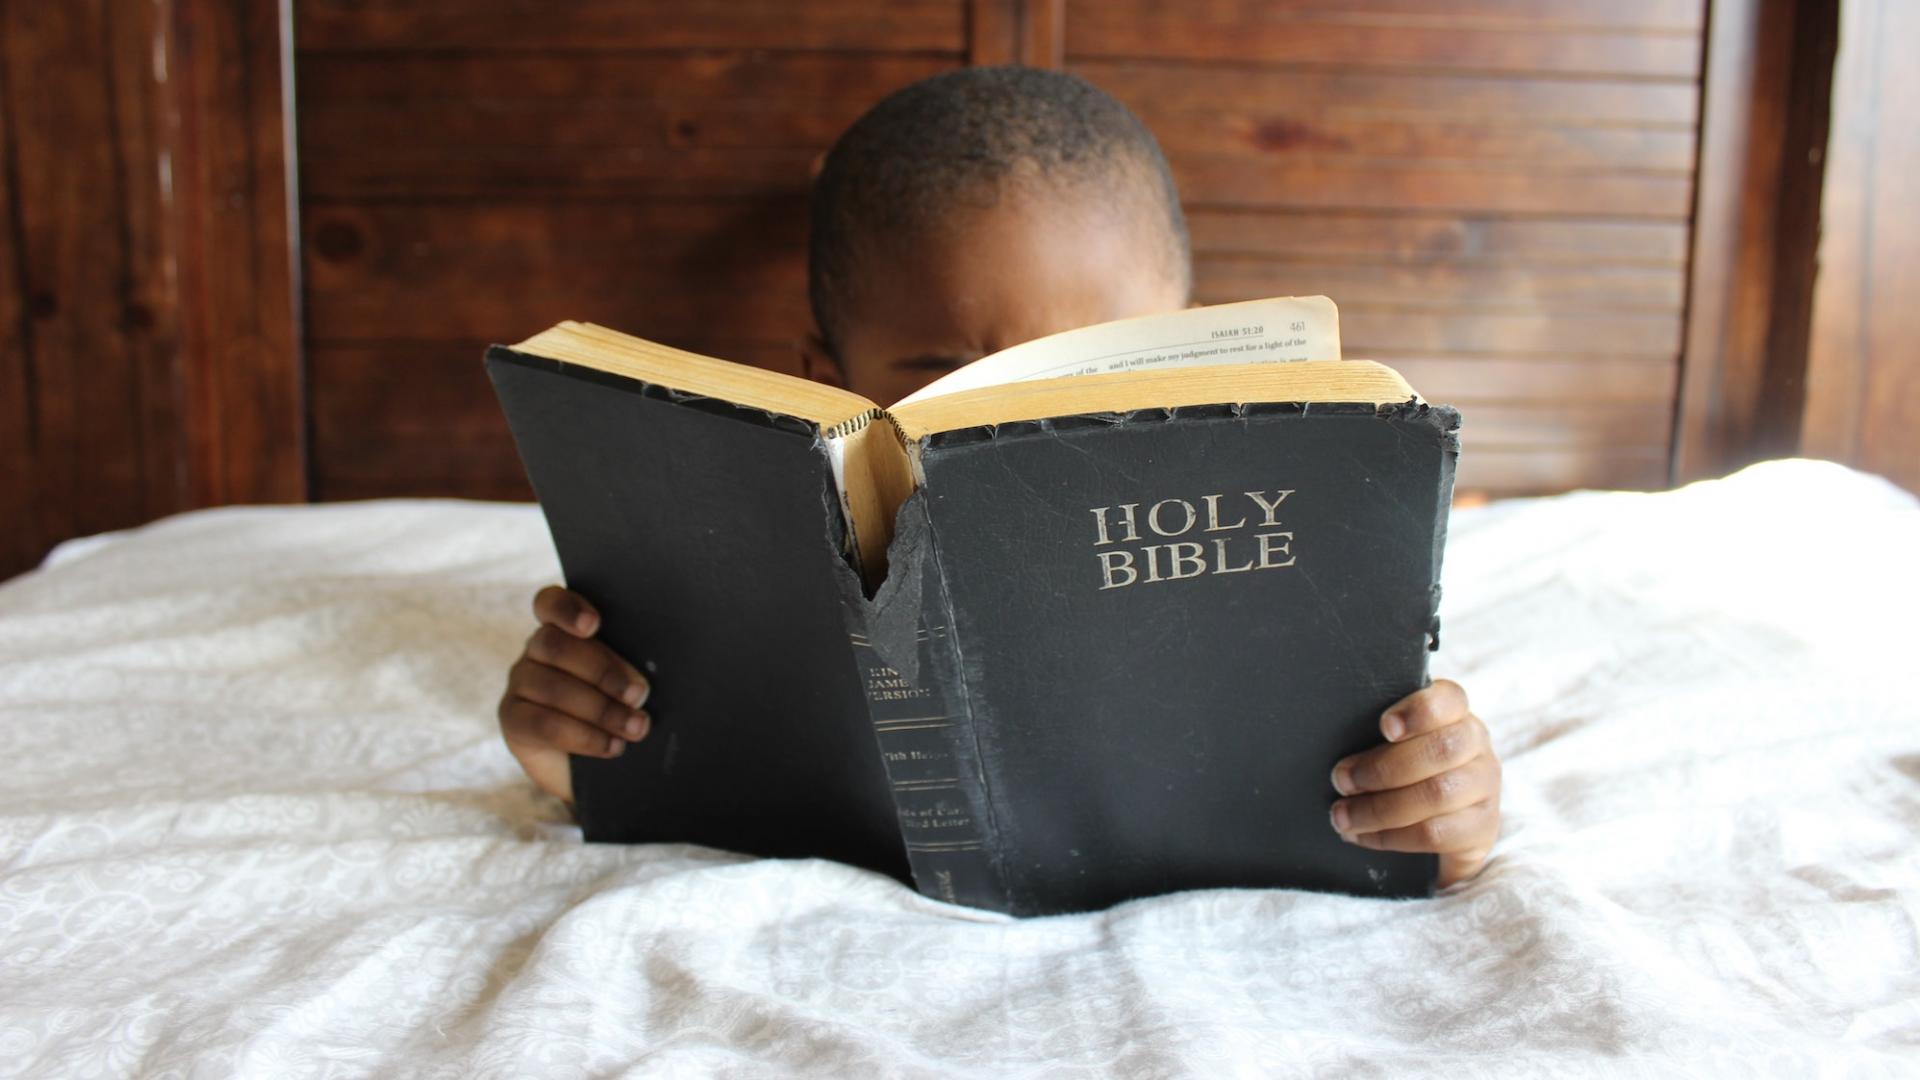 Jongetje leest de Bijbel - Samantha Sophia via Unsplash